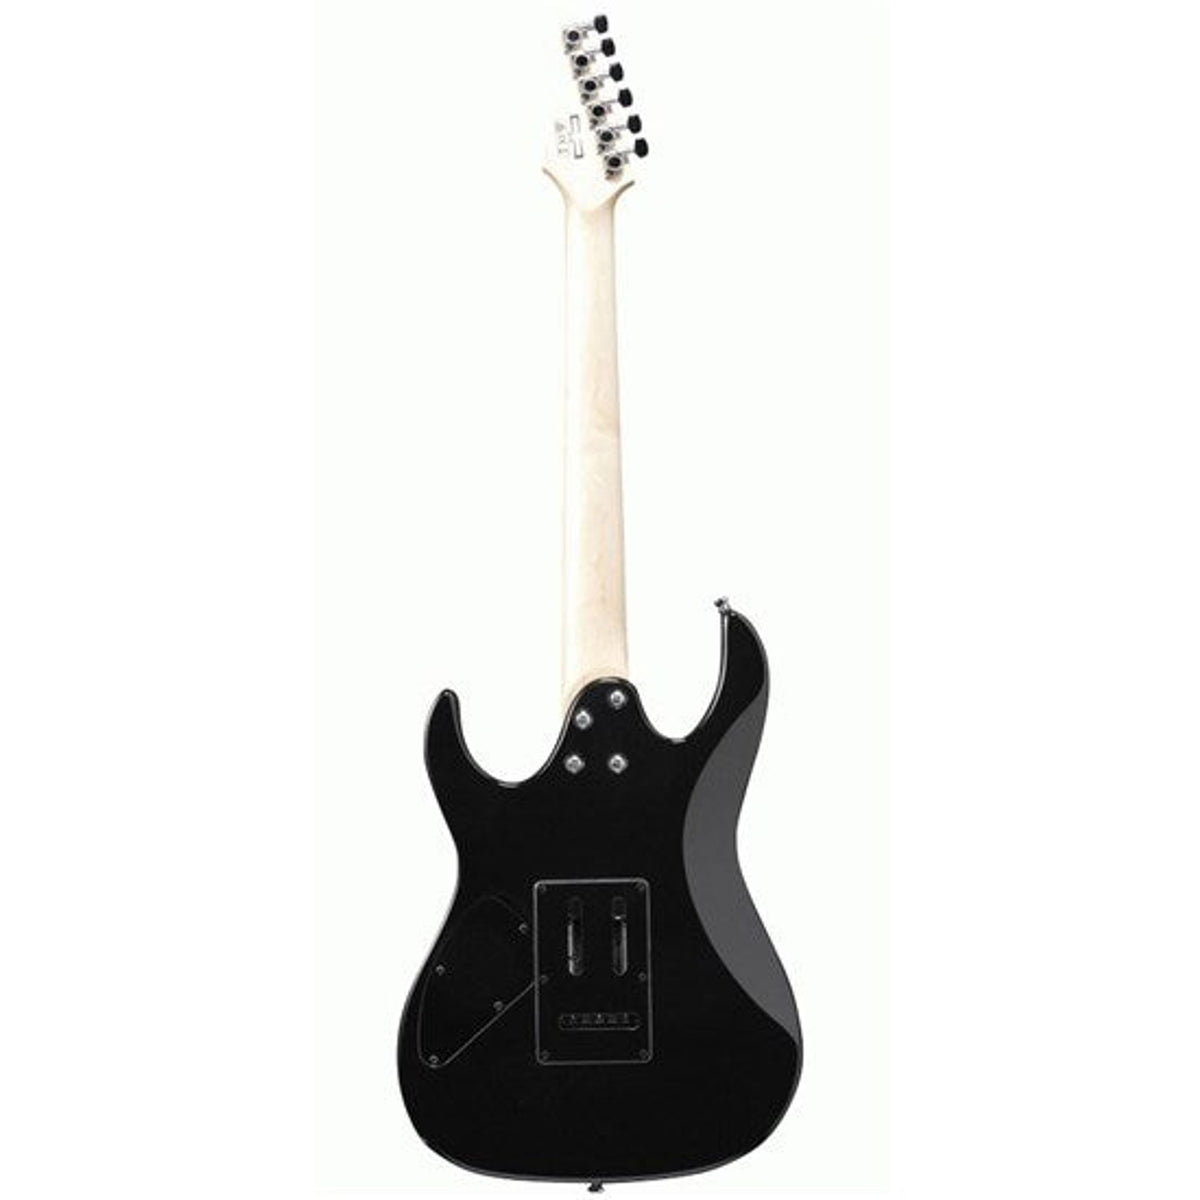 Ibanez RX70QA Electric Guitar